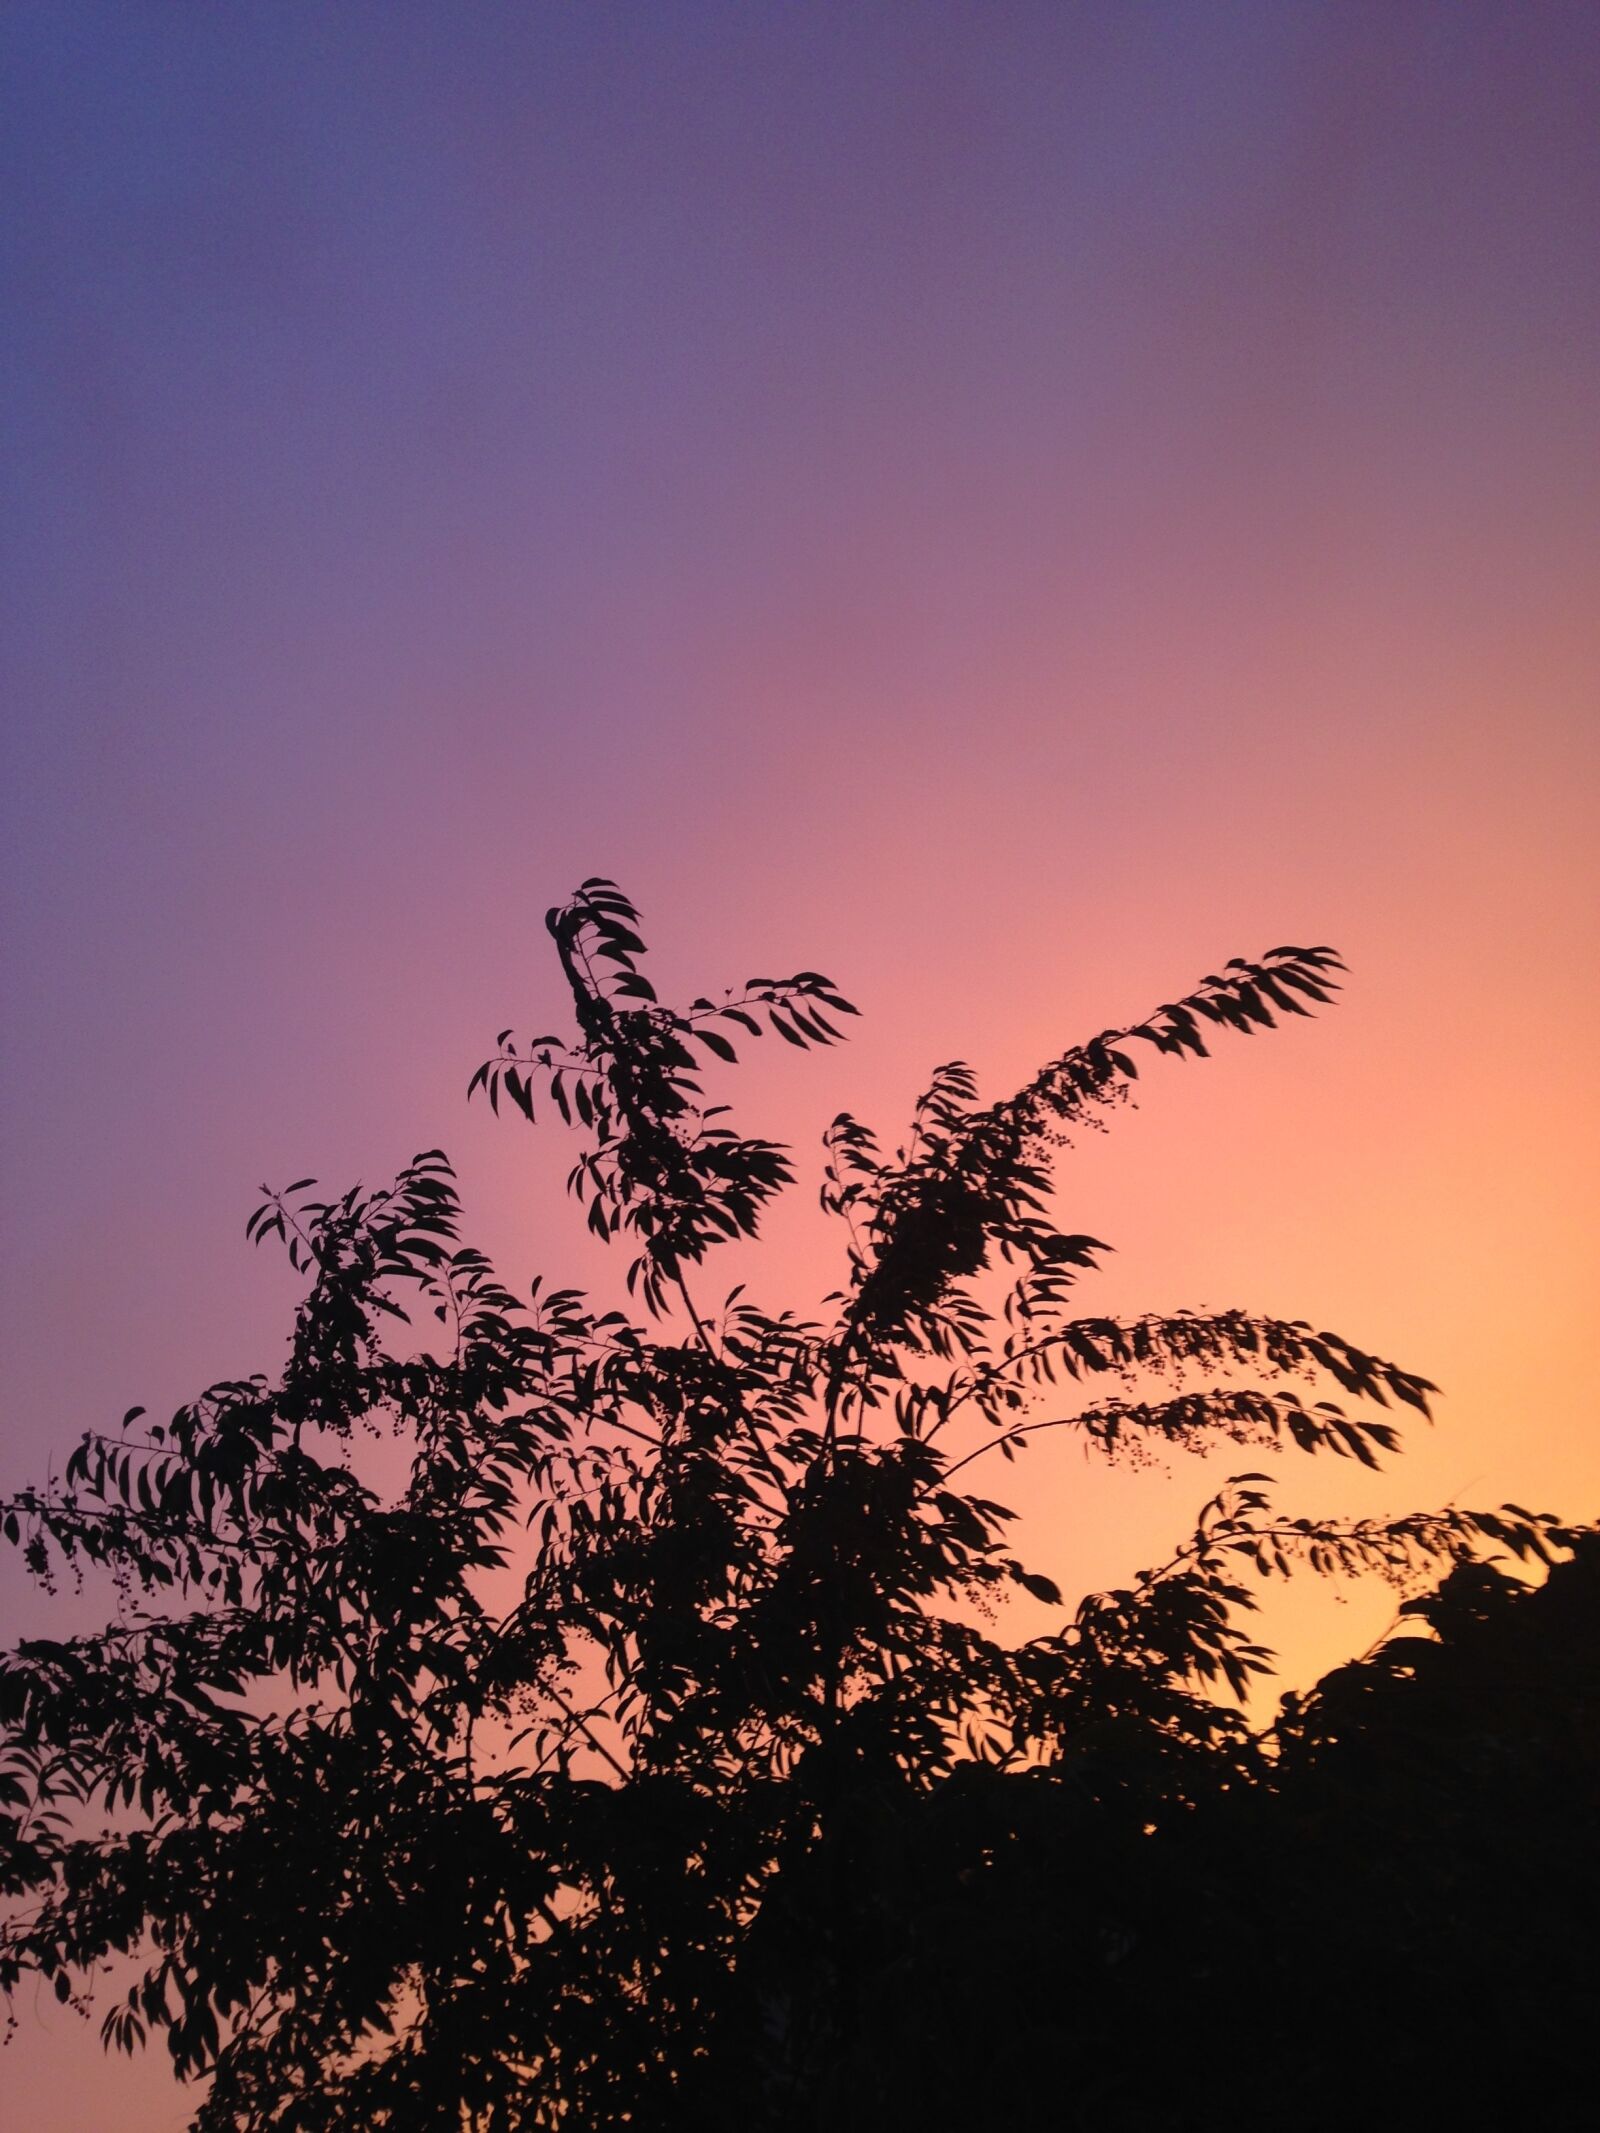 Apple iPhone 5c sample photo. Sky, plant, nature photography